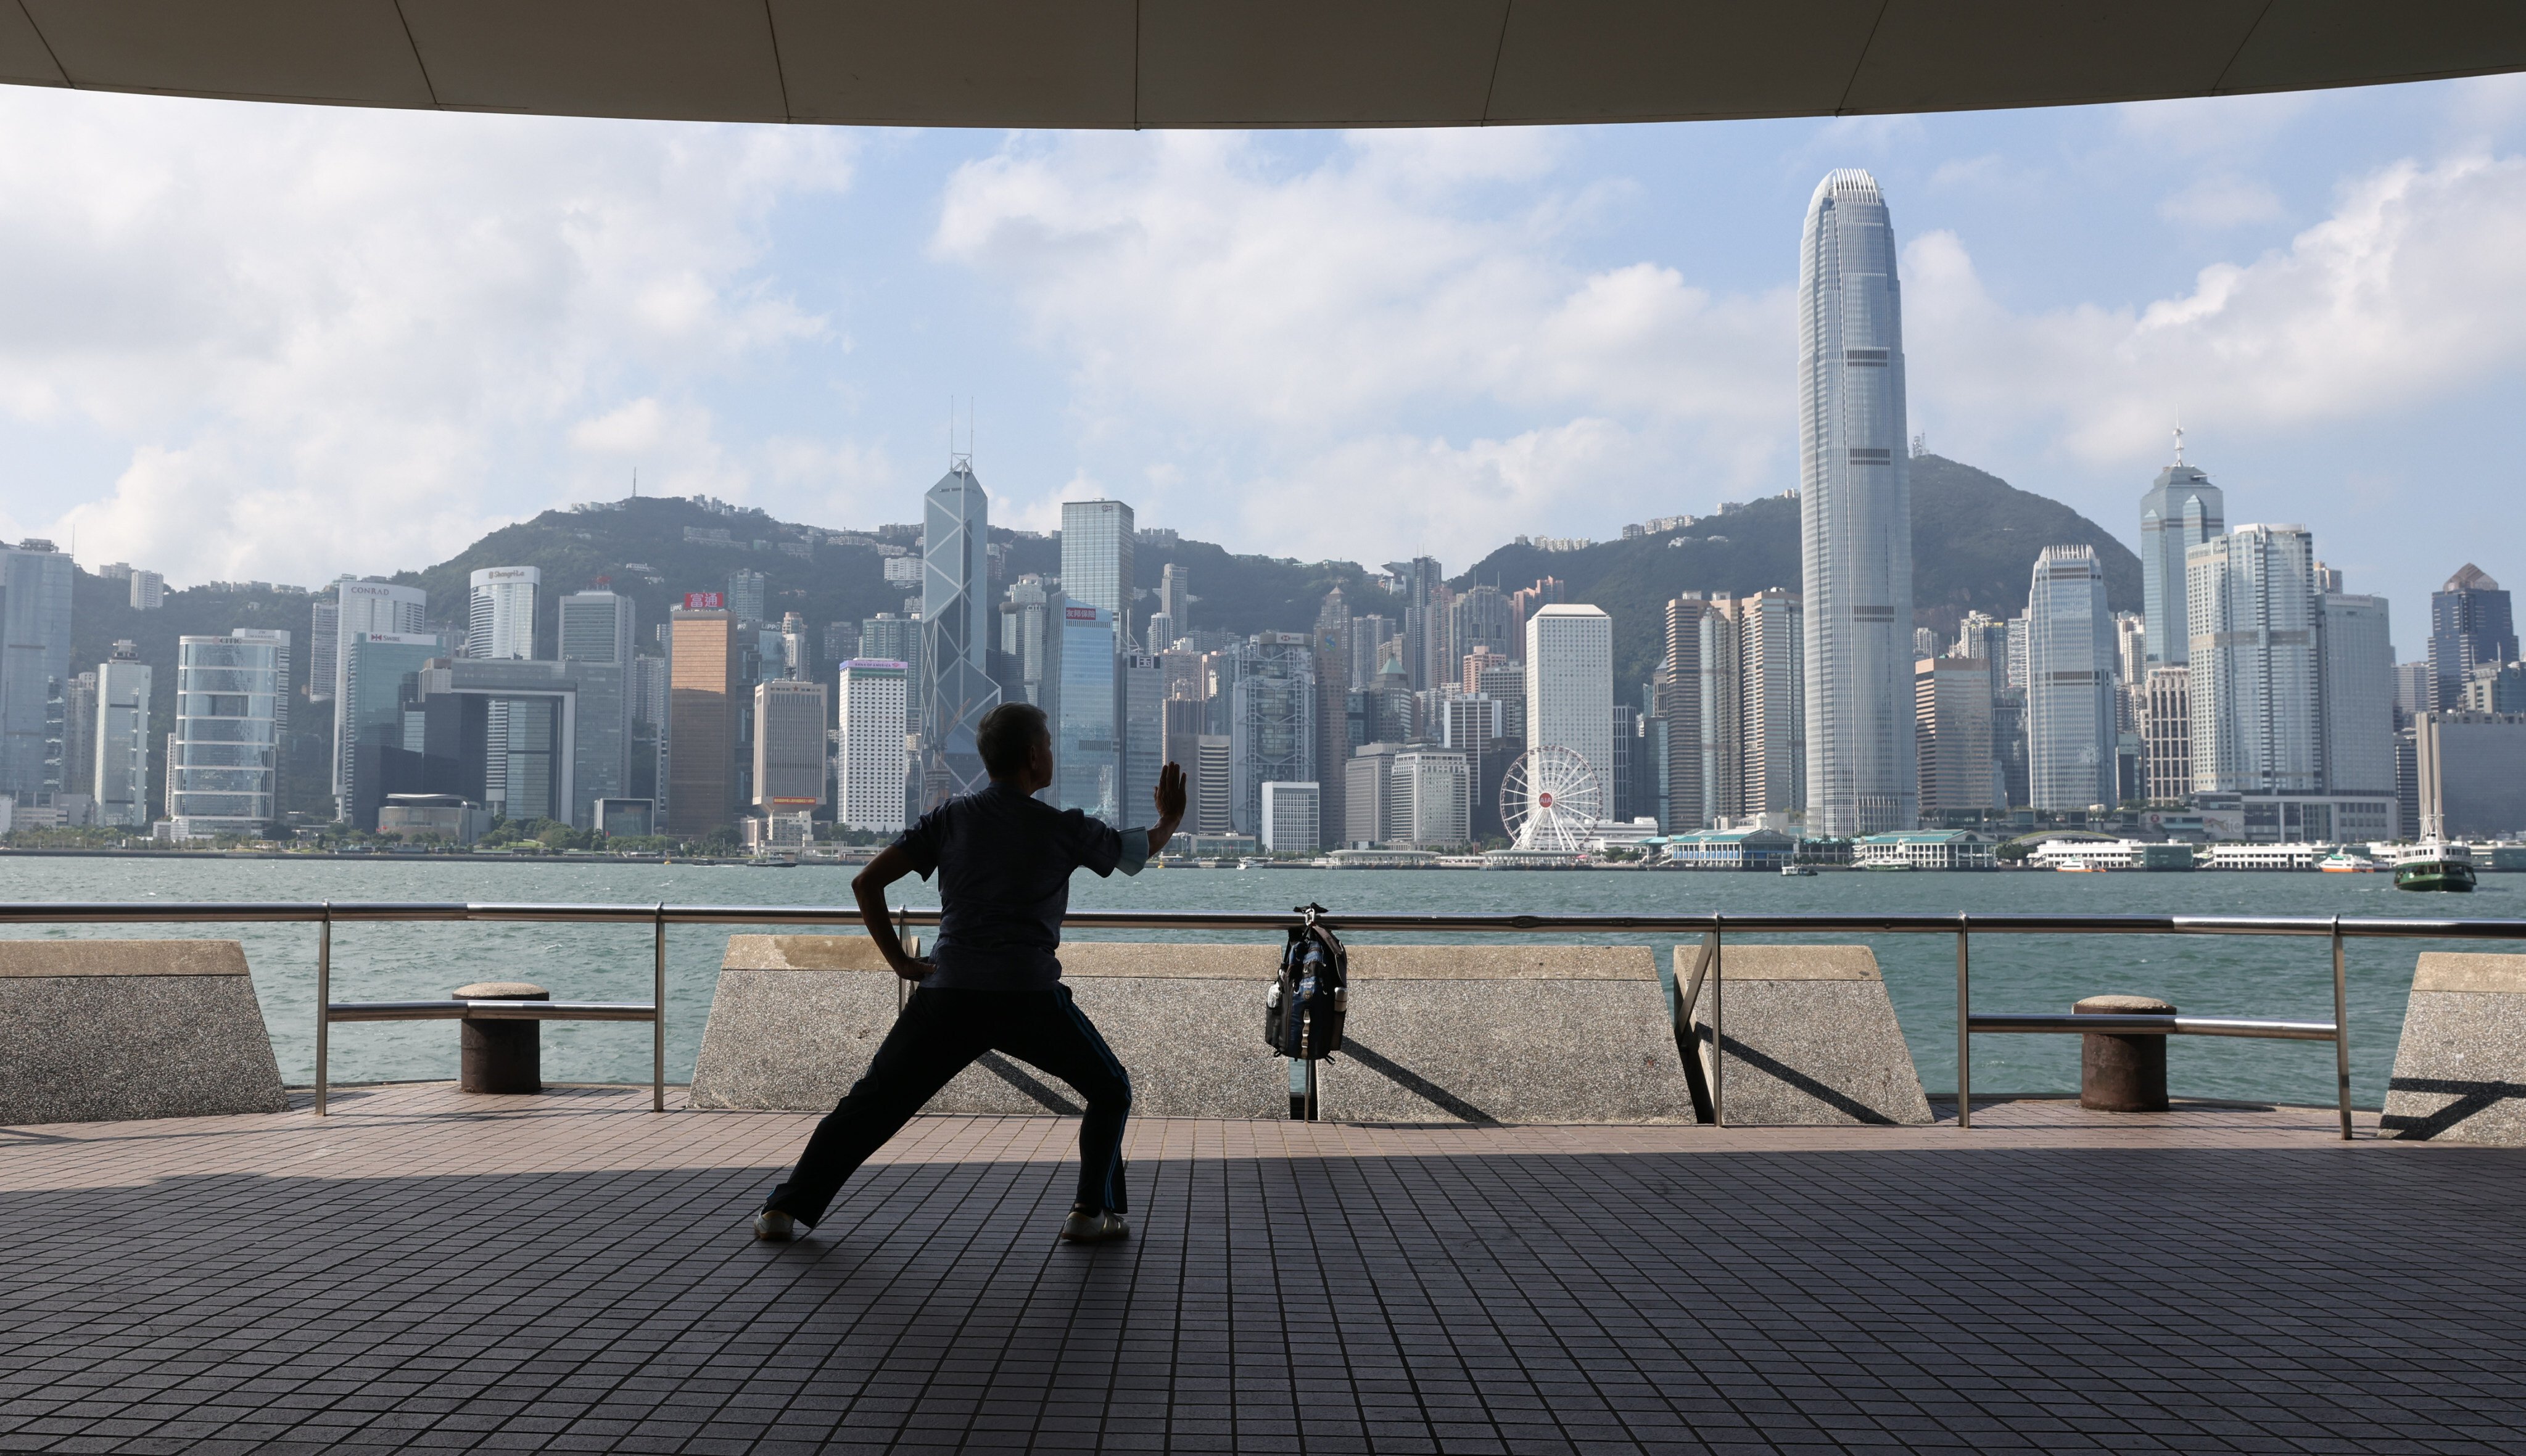 View point picture taken at Tsim Sha Tsui. 04OCT21 SCMP / K. Y. Cheng